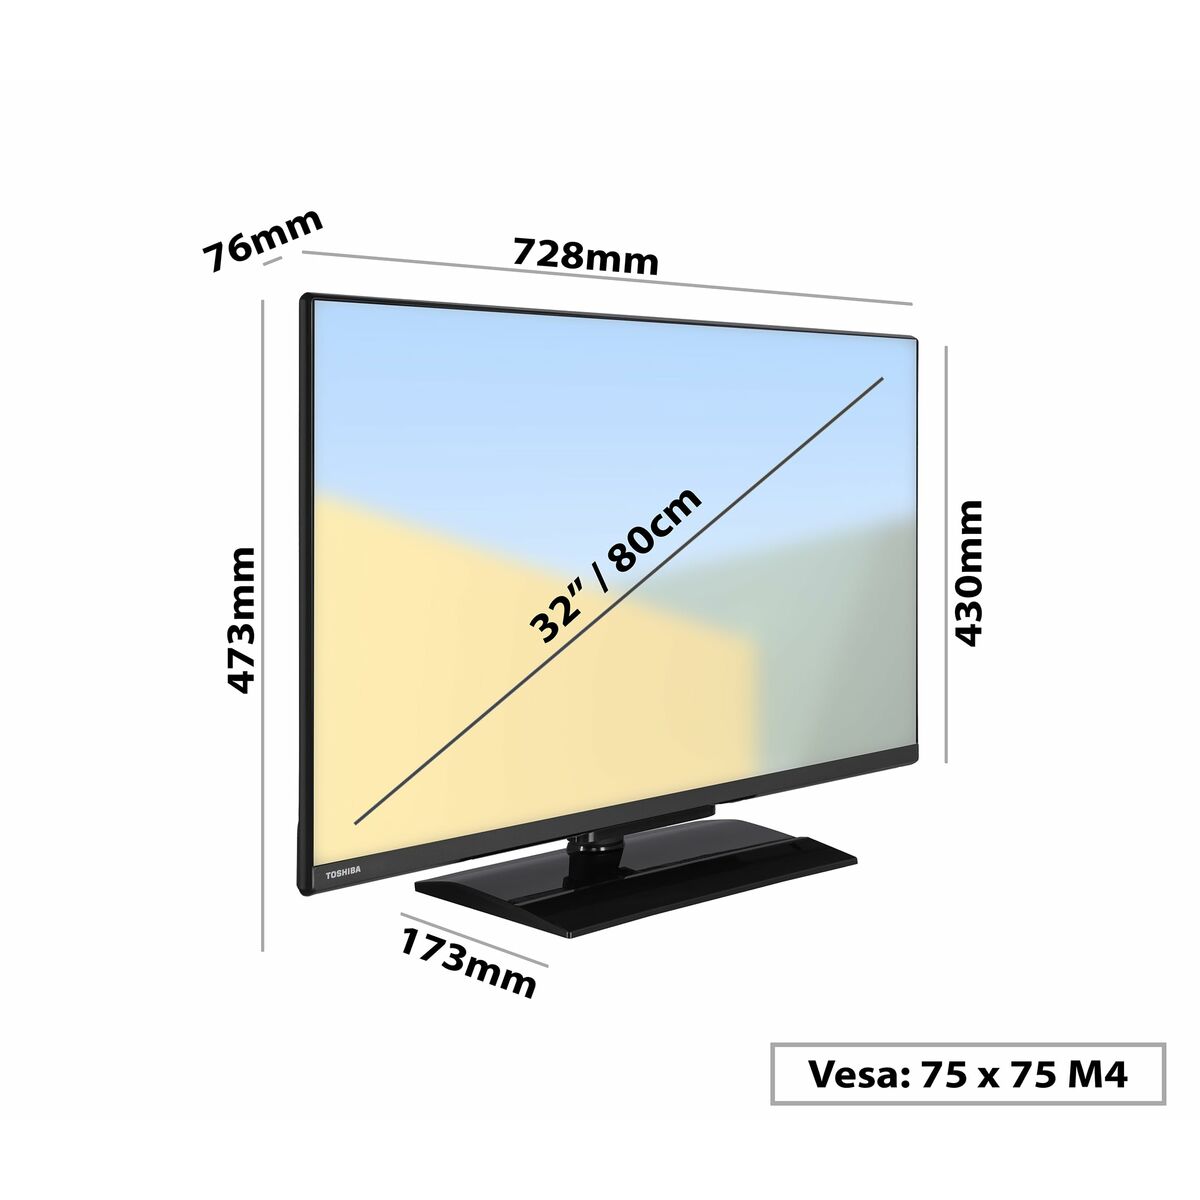 Smart TV Toshiba 32WV3E63DG HD 32" LED